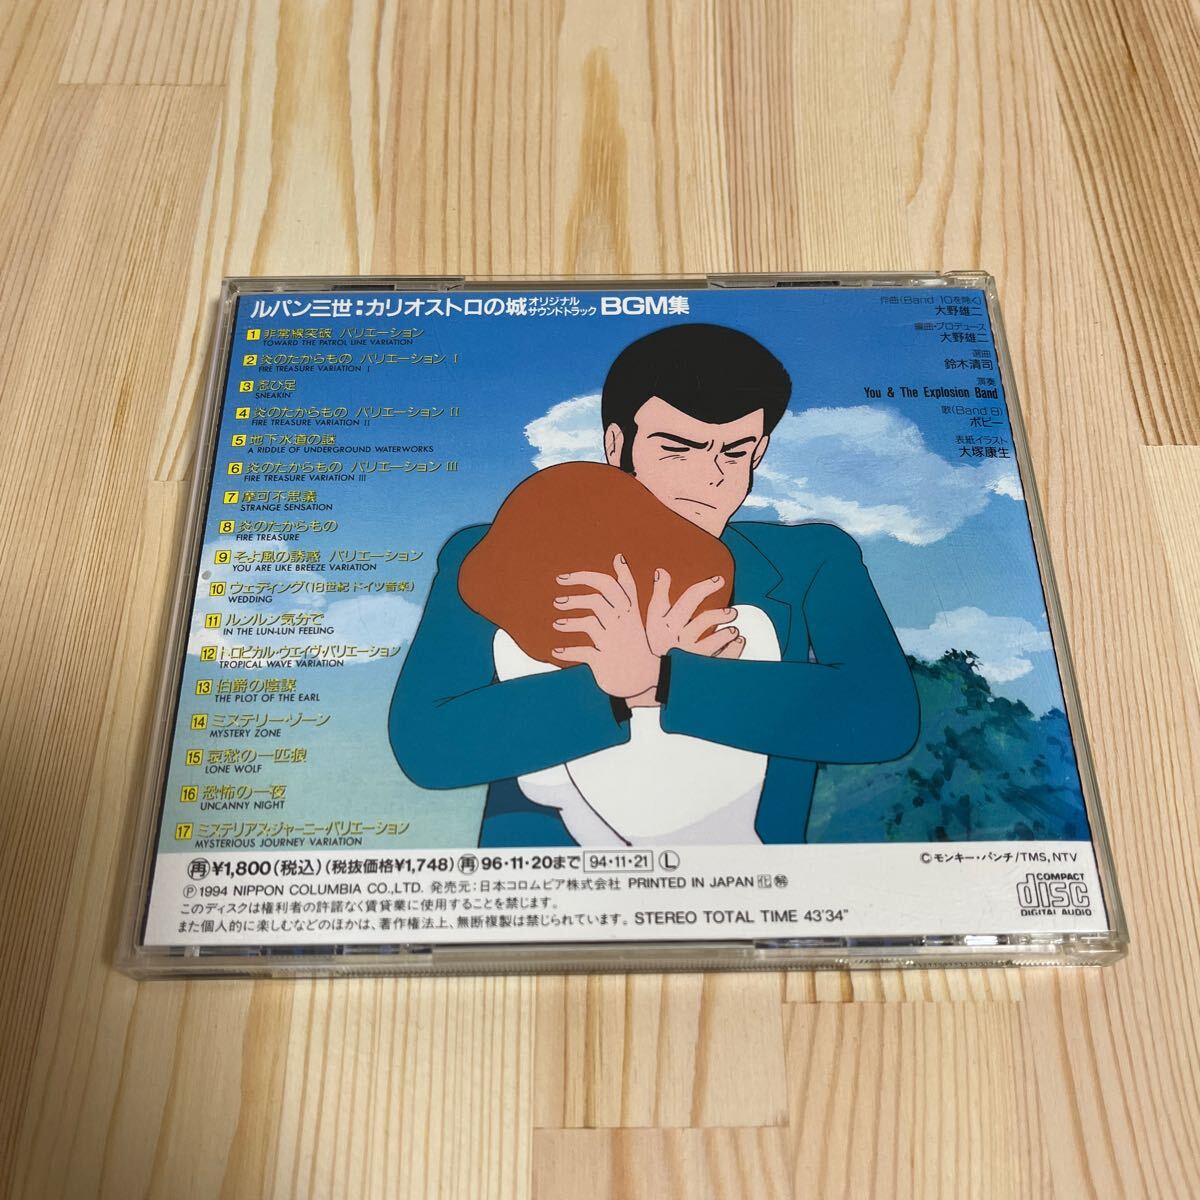 CD Lupin III kali мужской Toro. замок BGM сборник оригинал саундтрек Monkey дырокол 